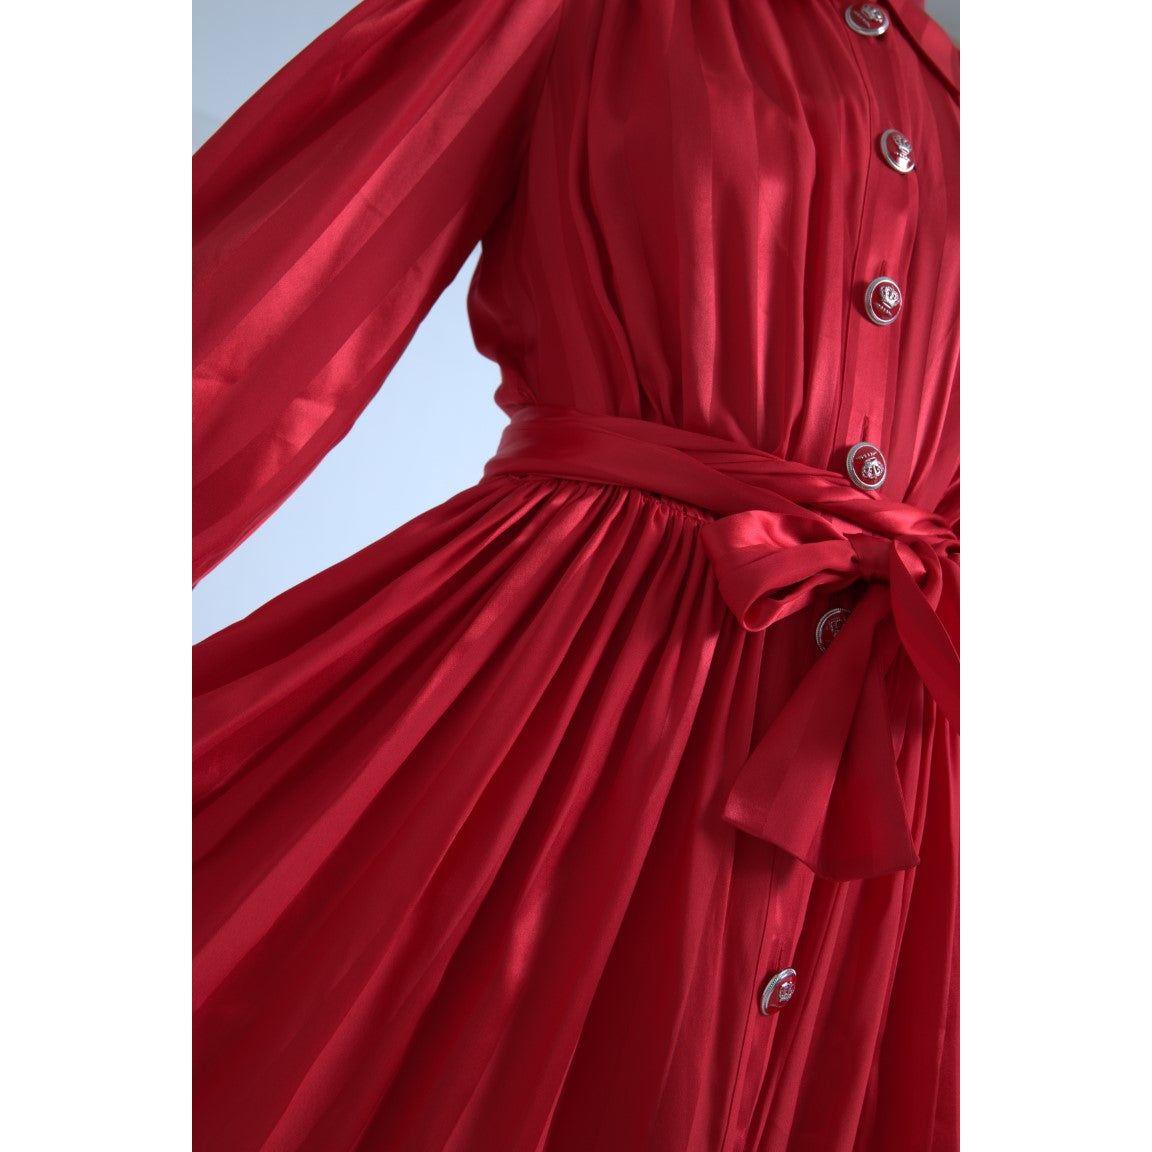 Dolce & Gabbana Elegant Red Silk Midi Dress with Button Detail red-satin-silk-button-down-belted-midi-dress